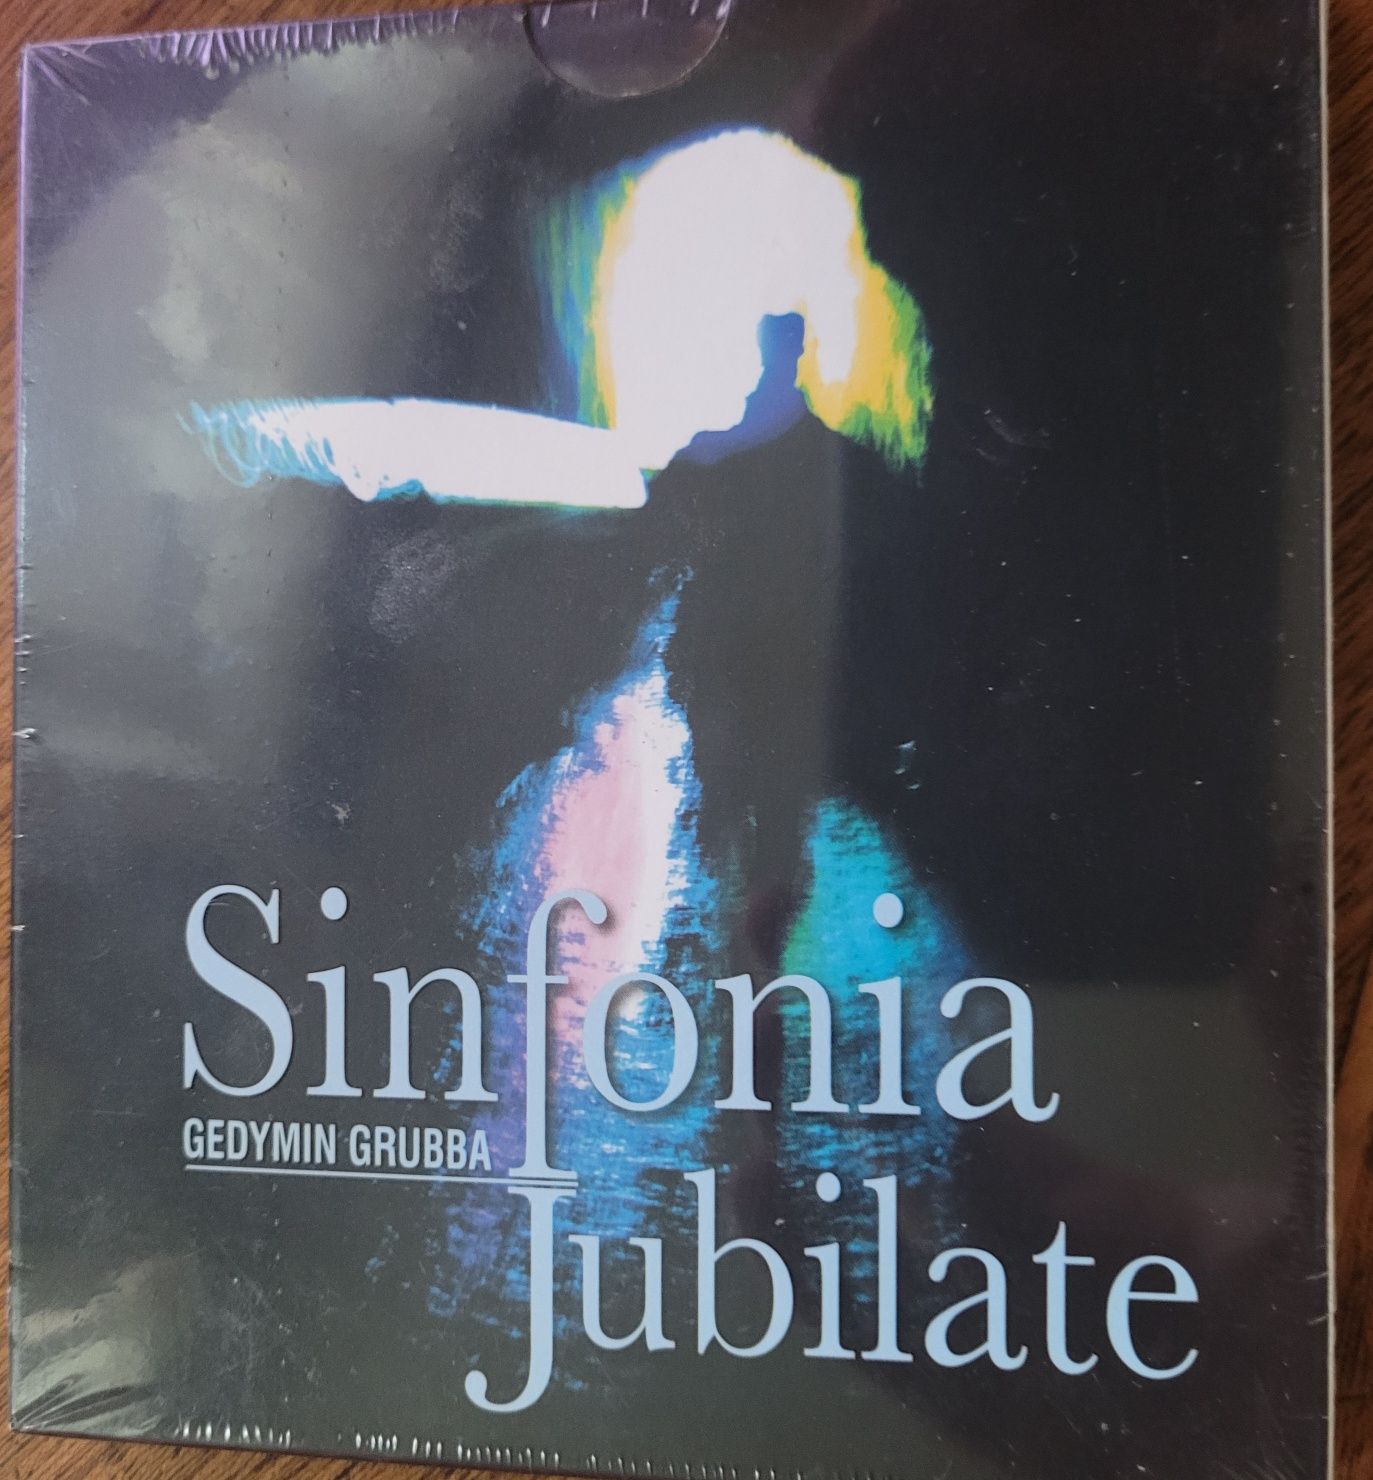 DVD/CD Gedymin Grubba (organy) Sinfonia Jubilate (ed.specjalna) 2008